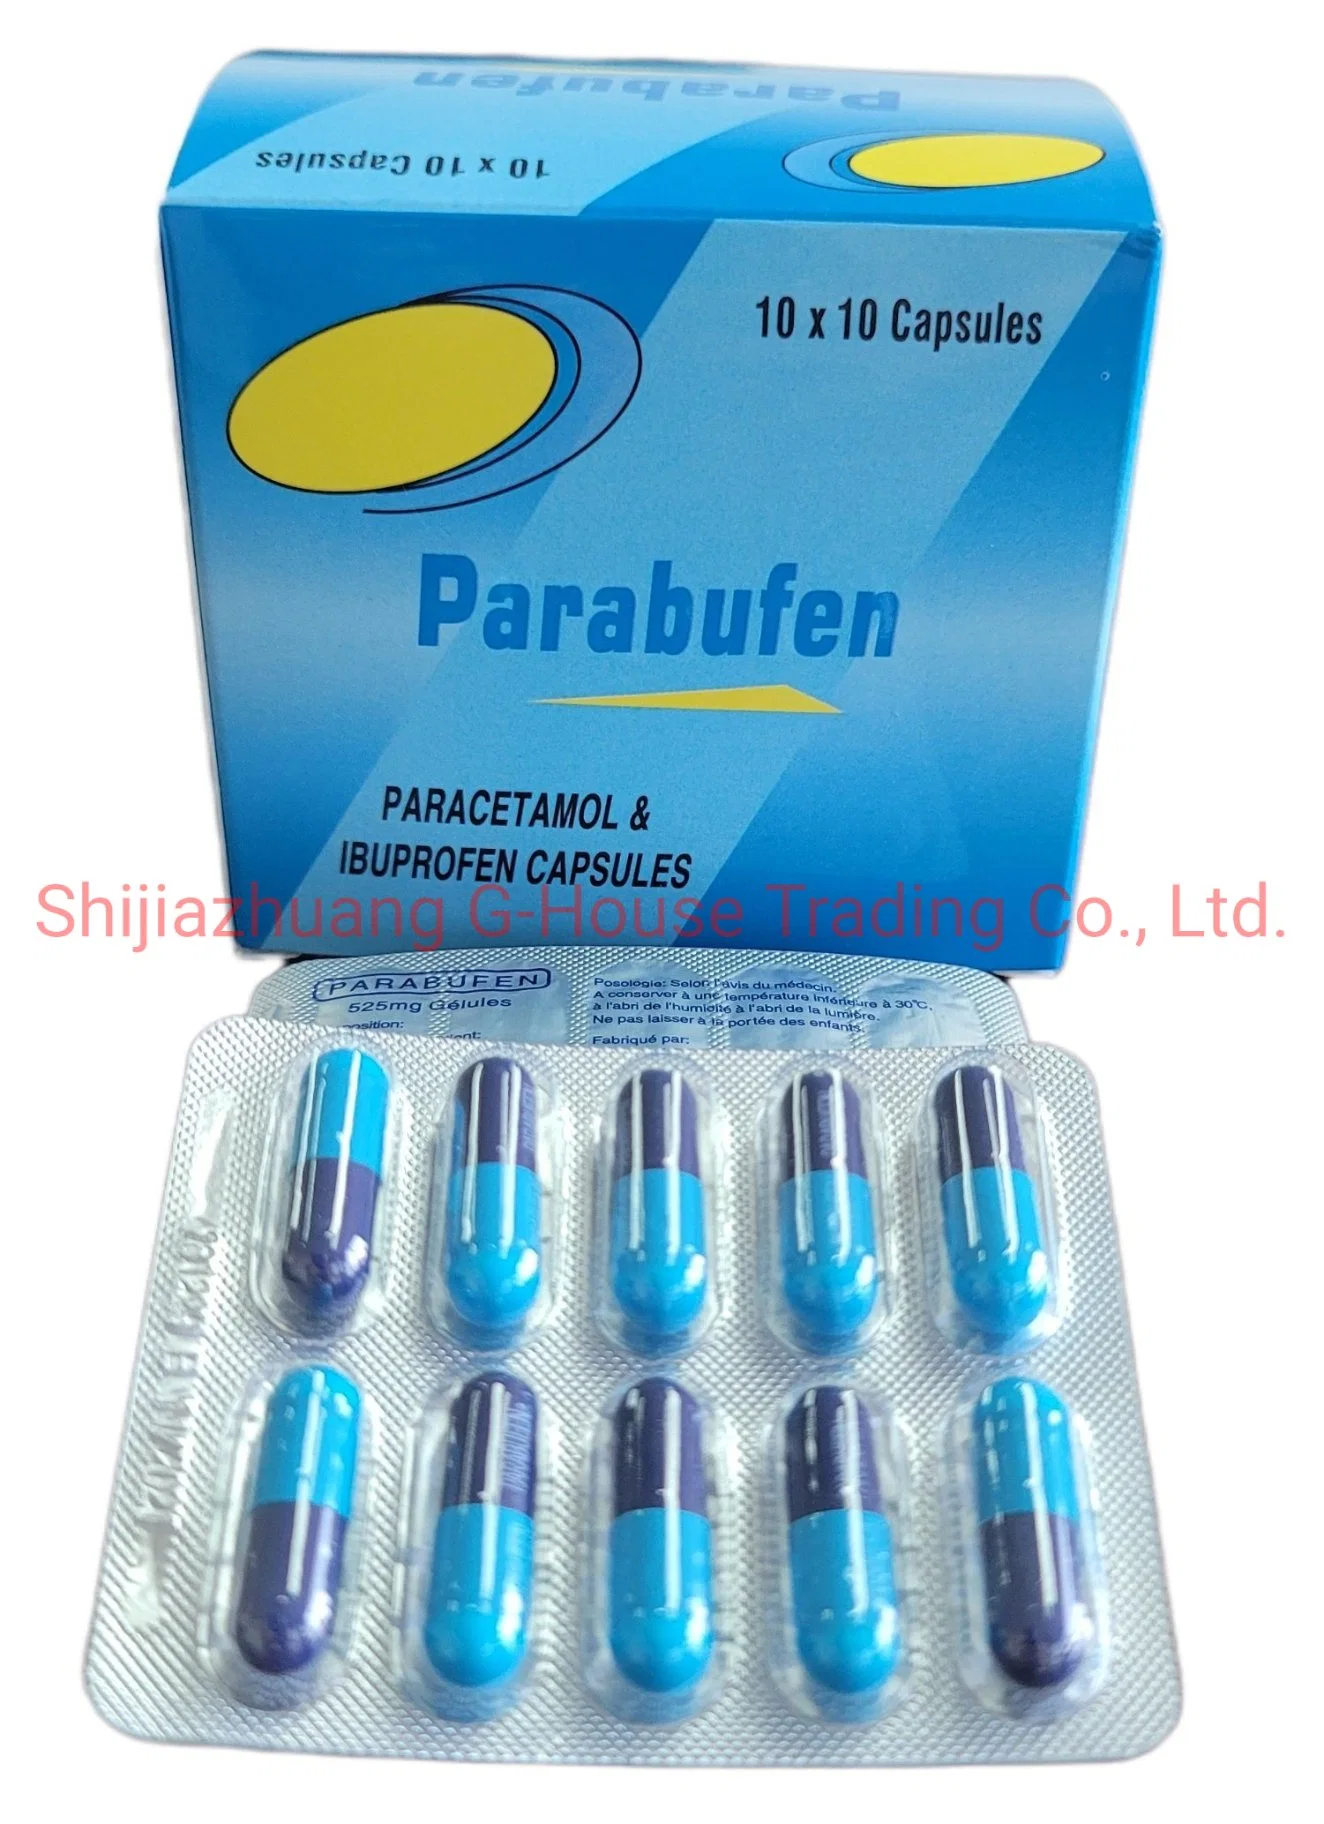 Paracetamol and Ibuprofen Capsules 325mg/200mg Pharmaceutical Medicine